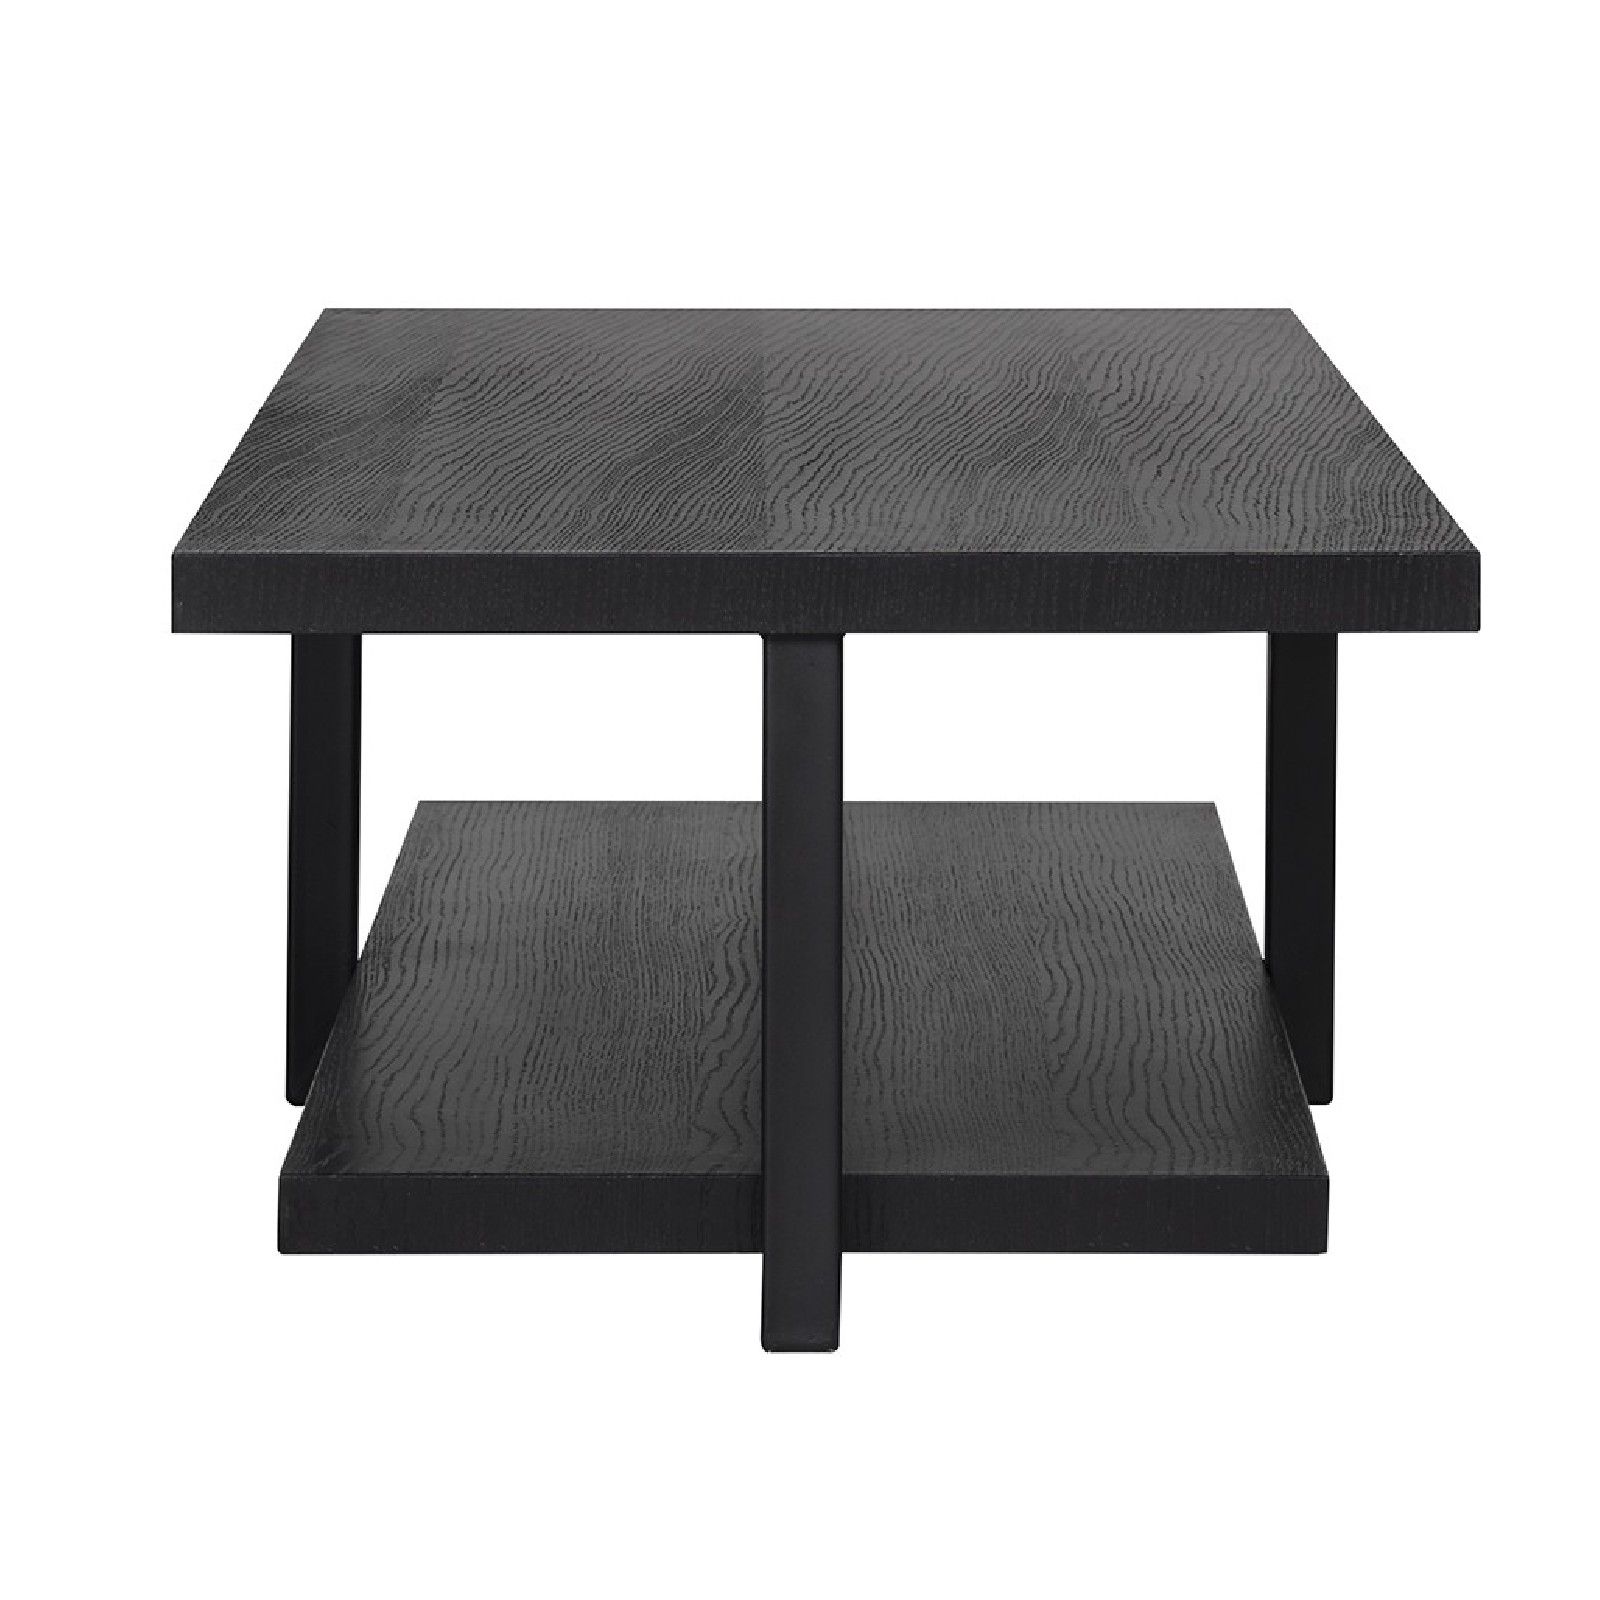 Table basse rectangulaire double plateau 140x65 